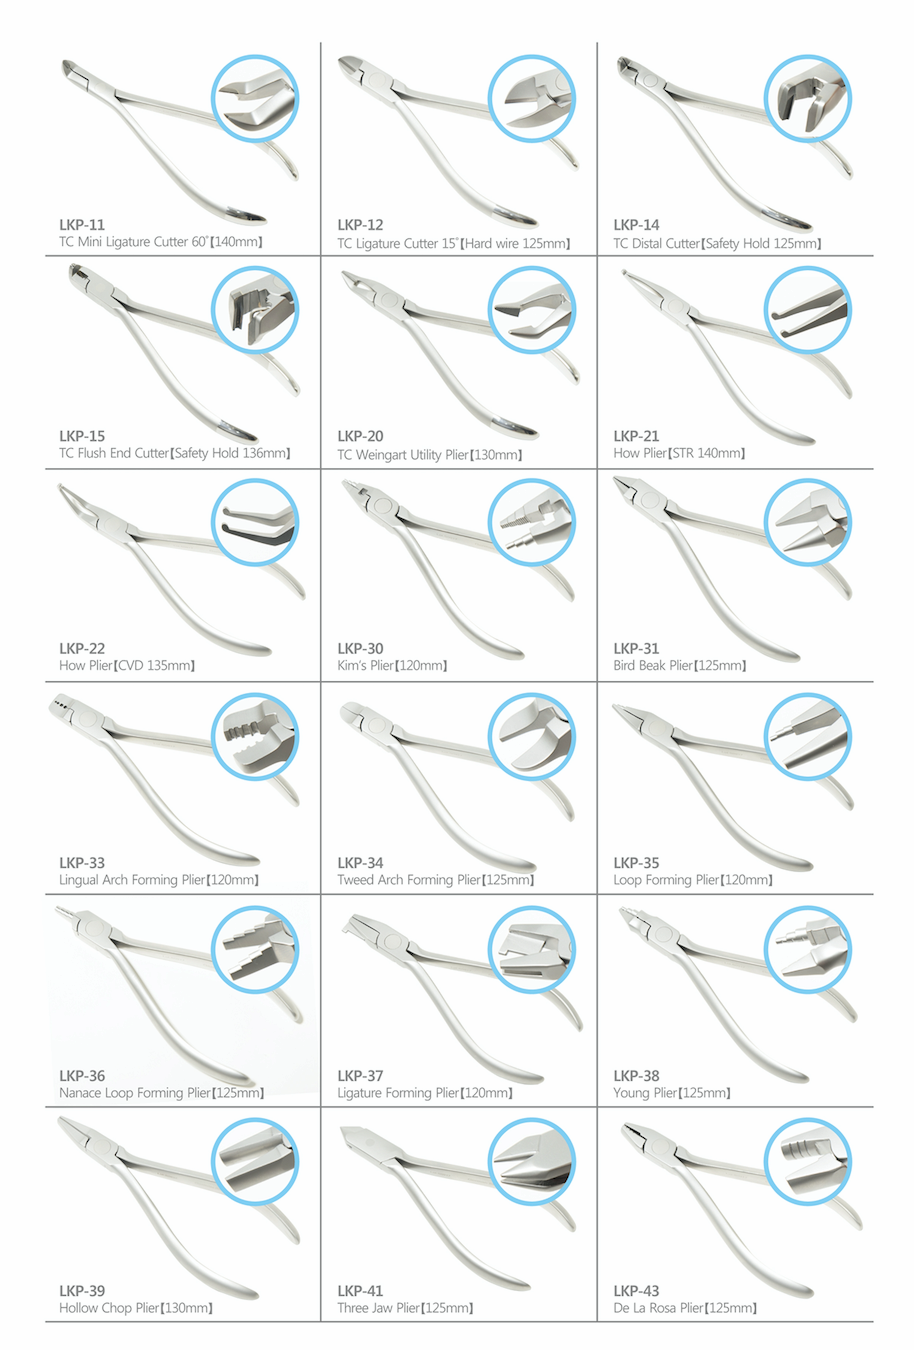 LK Orthodontic Instruments